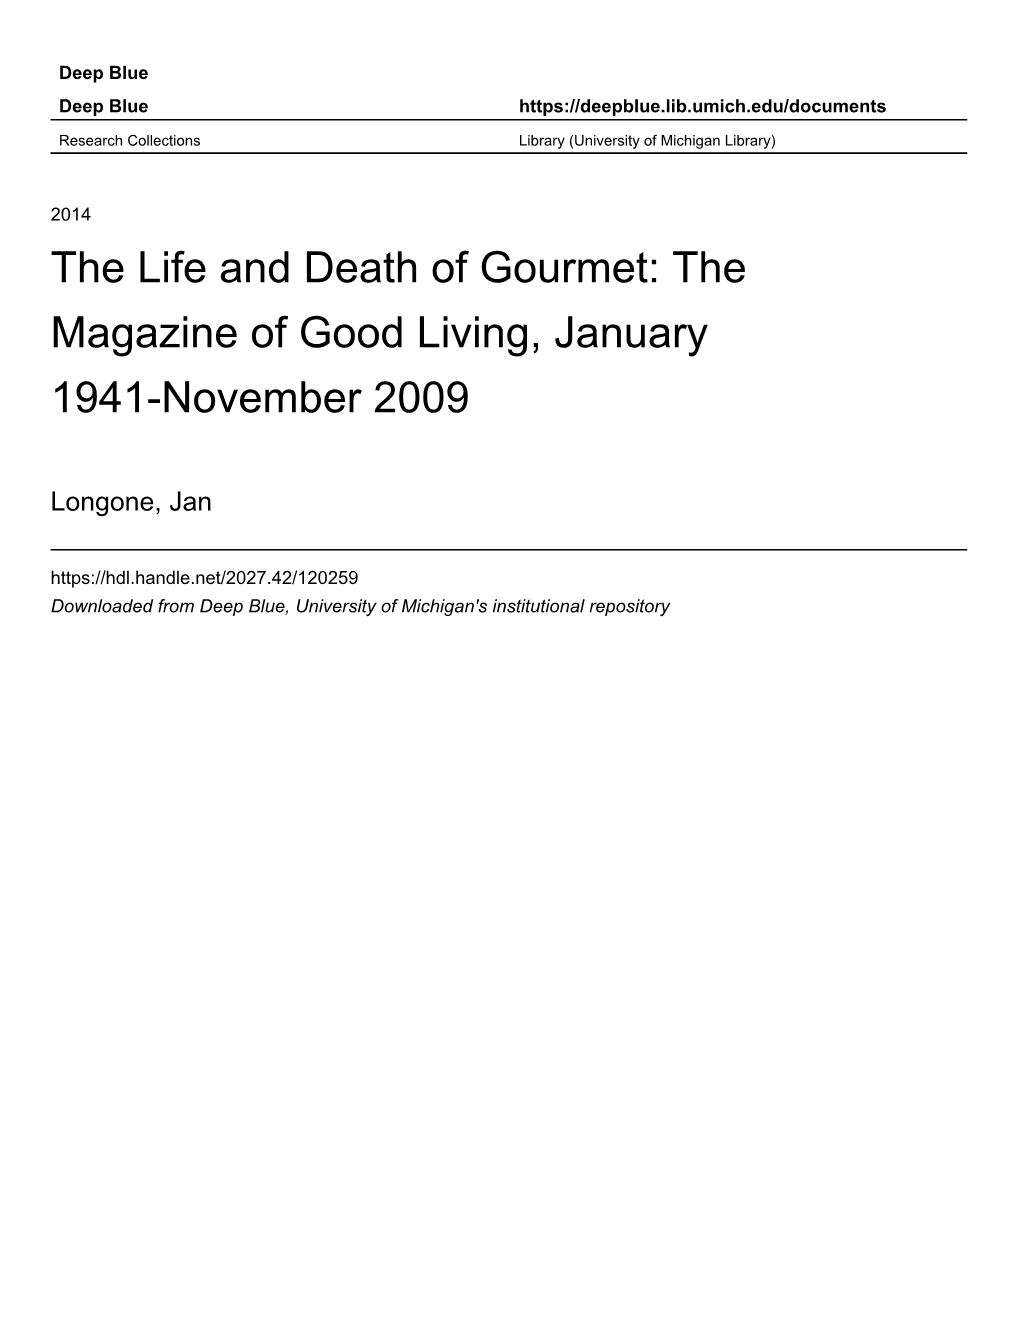 Gourmet: the Magazine of Good Living, January 1941-November 2009